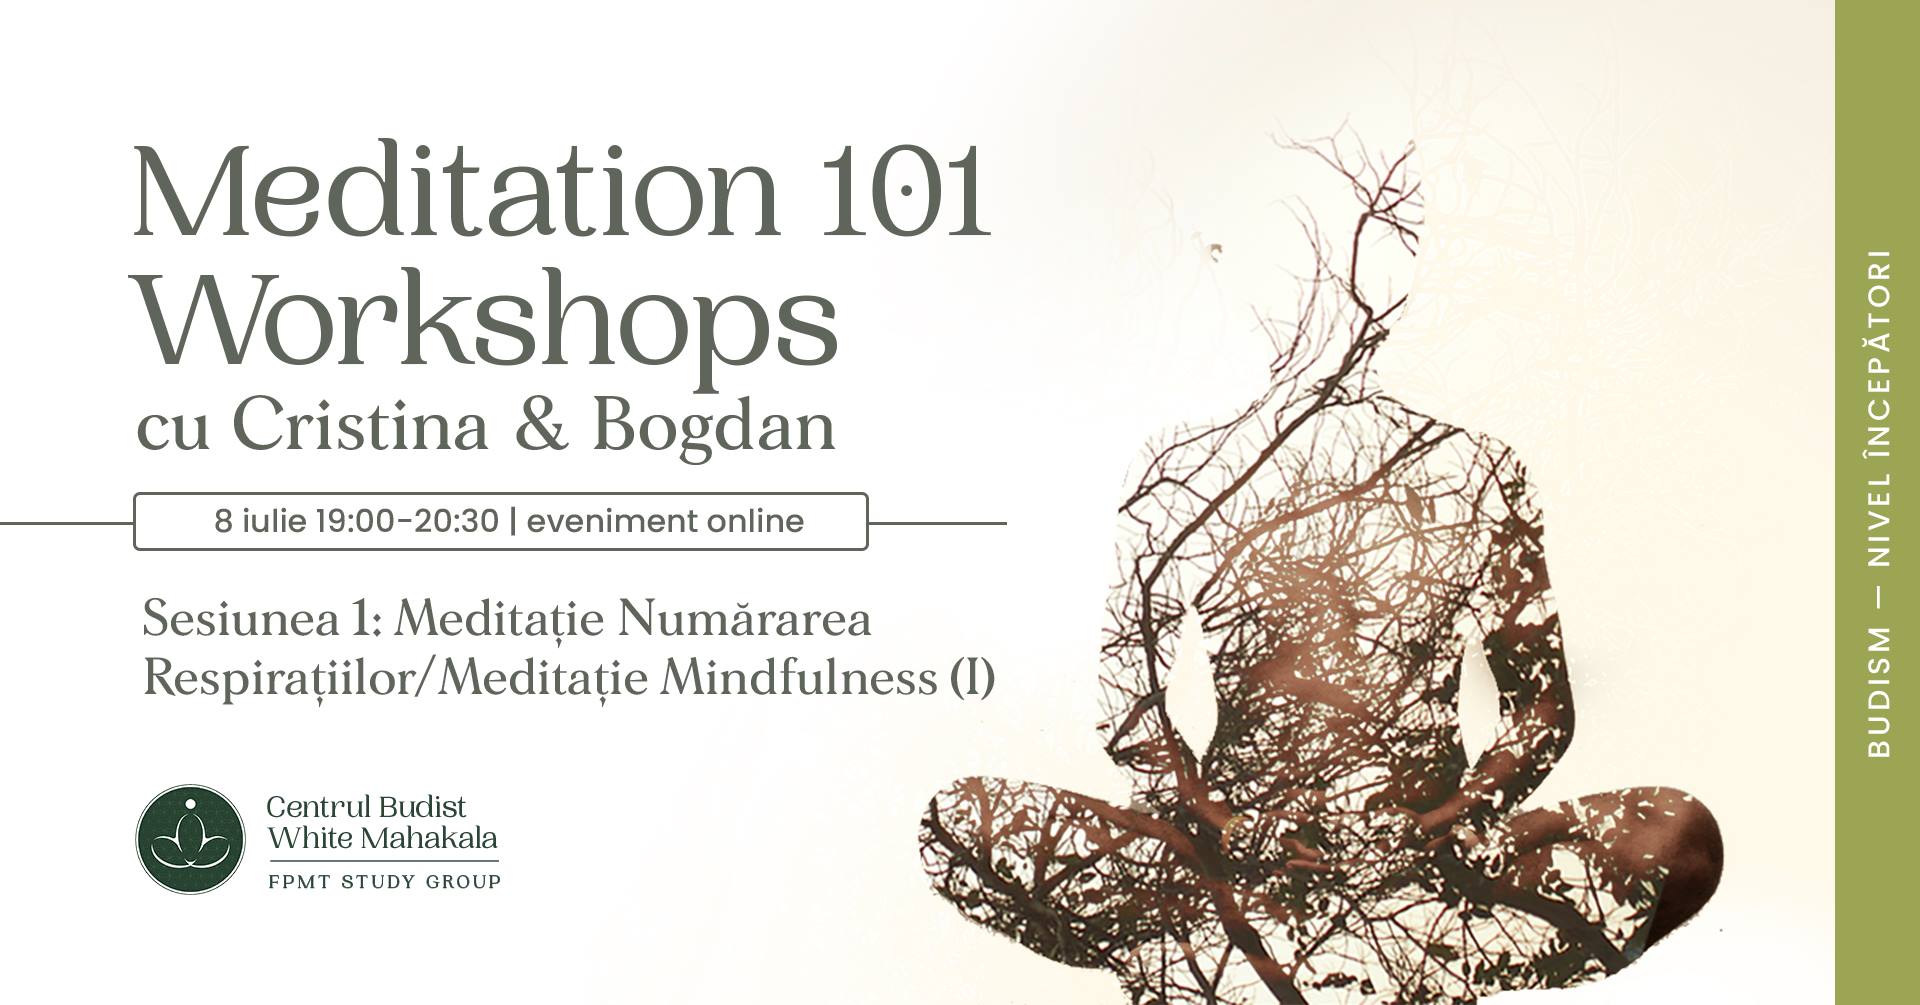 MEDITATION 101- Workshops Sesiunea 1: Meditatie Numararea Respiratiilor/Meditatie Mindfulness (I)